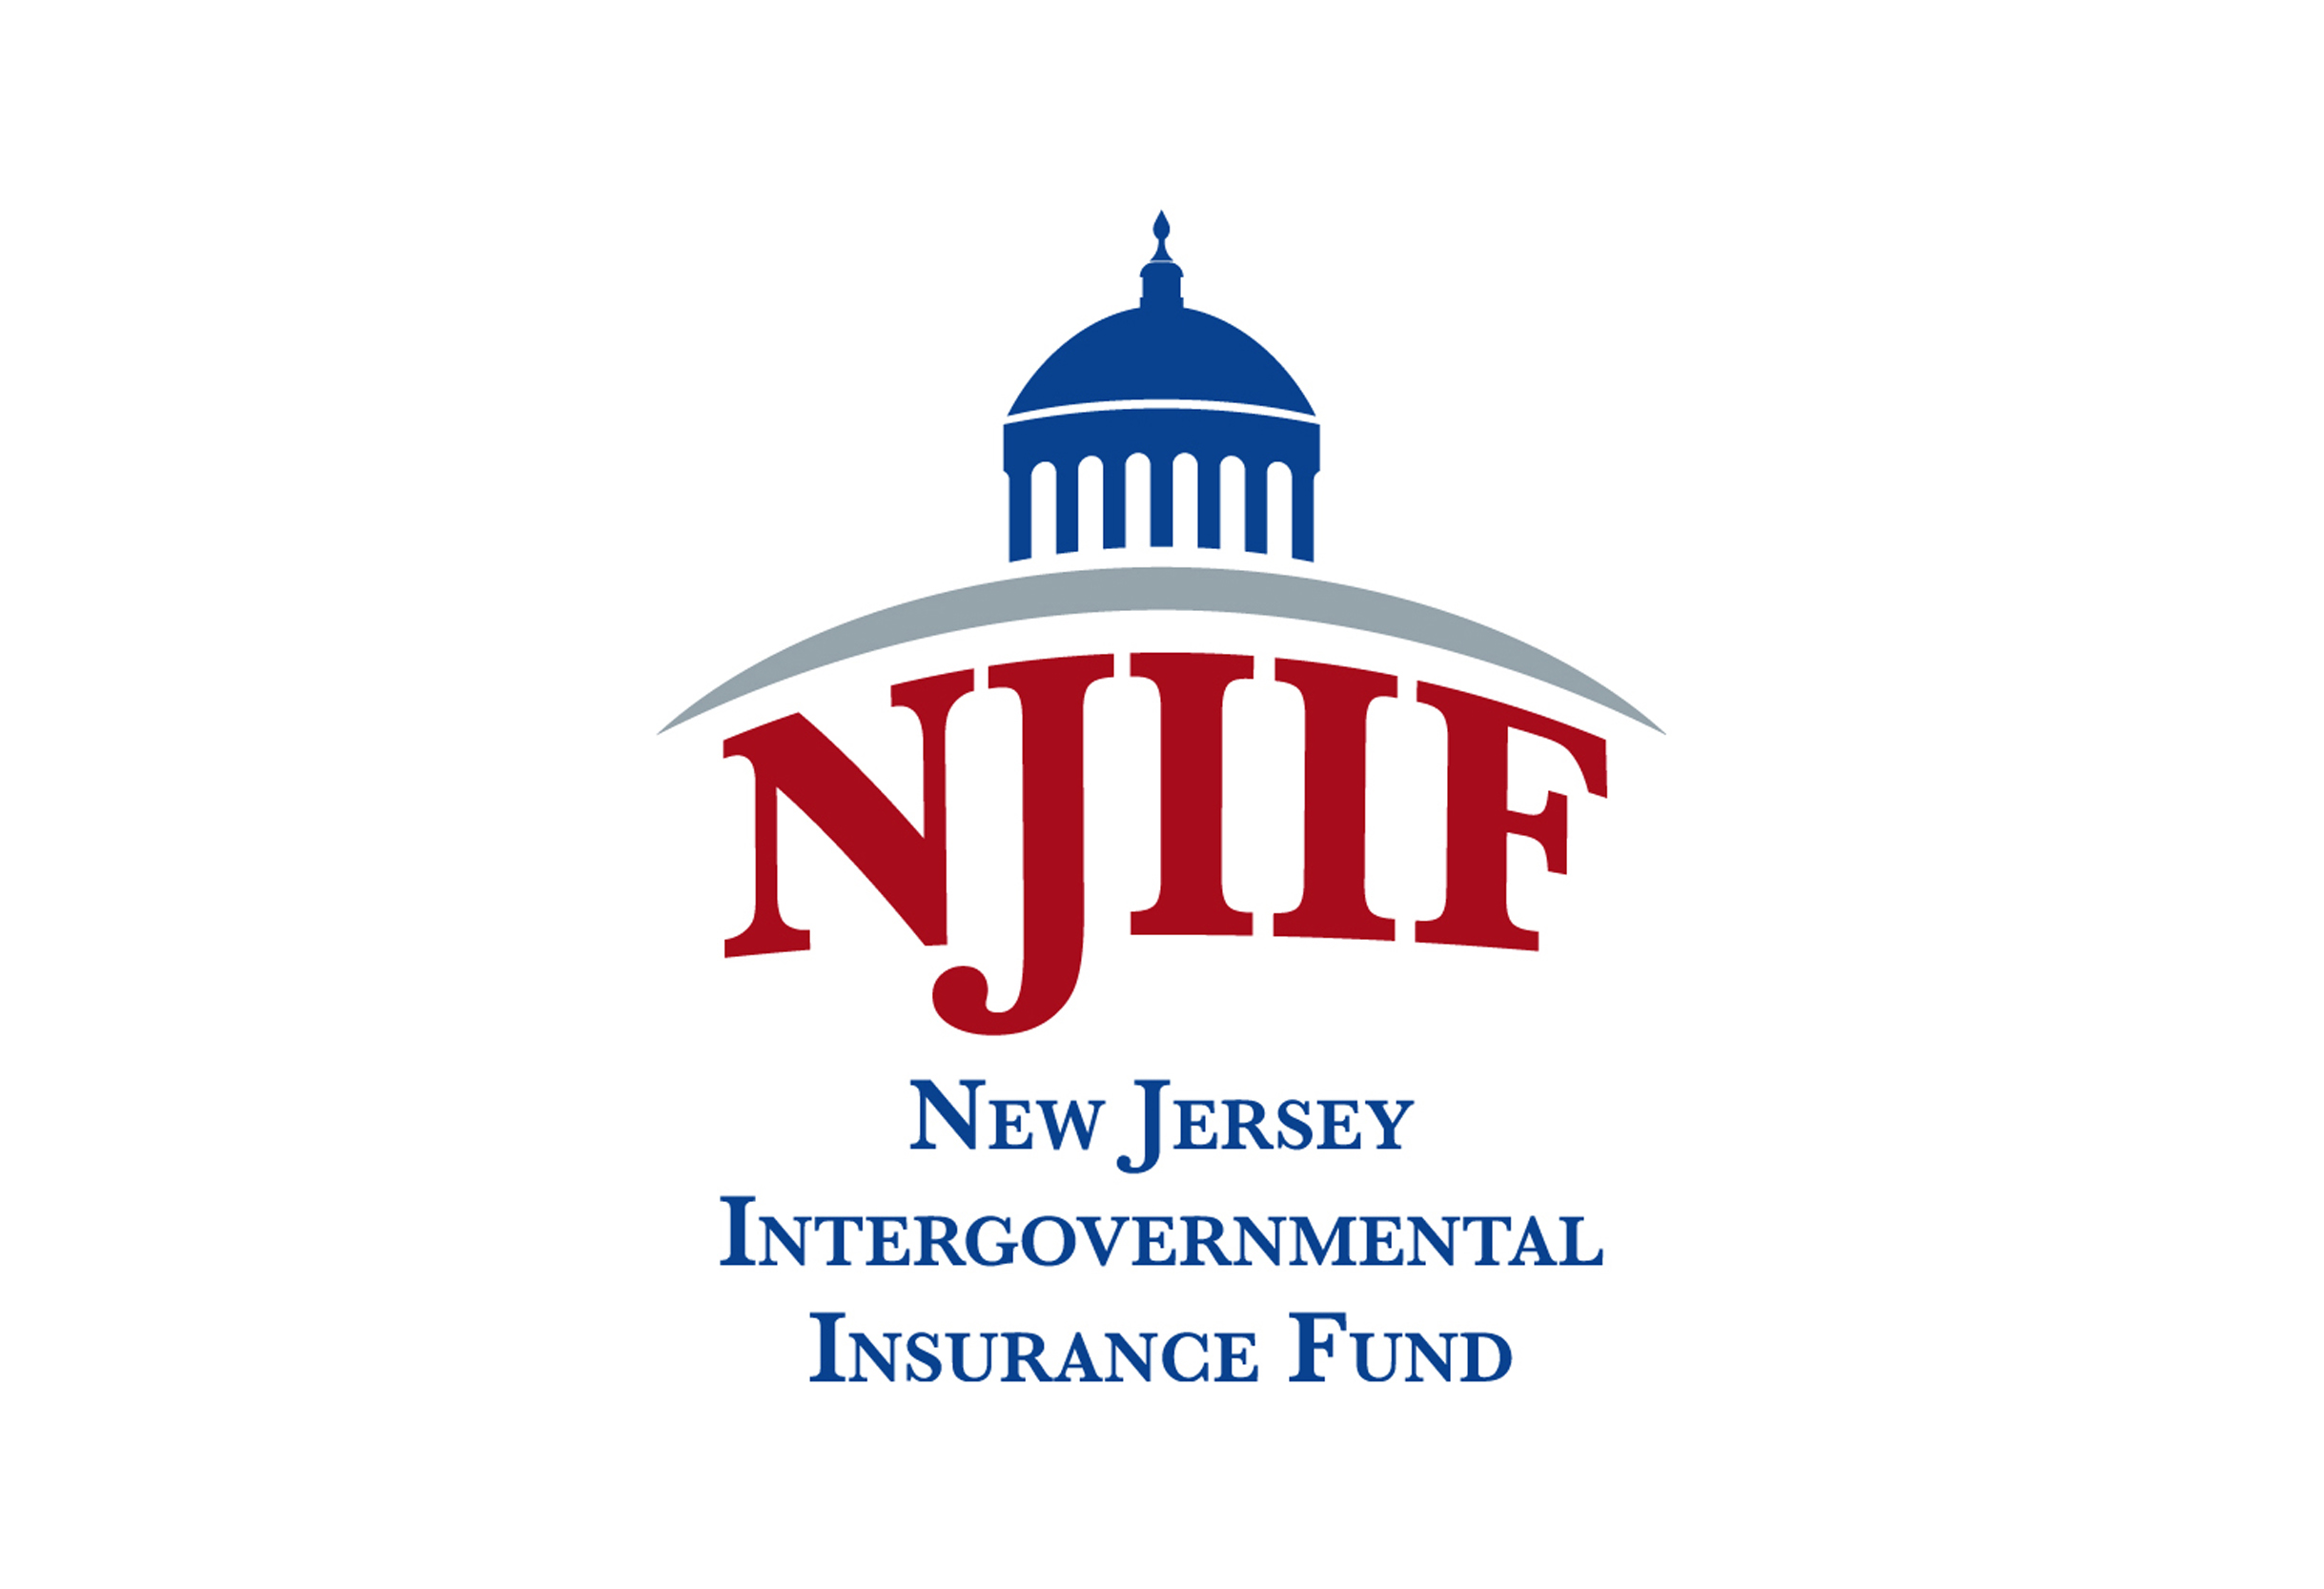  Logo Design: New Jersey Intergovernmental Insurance Fund 